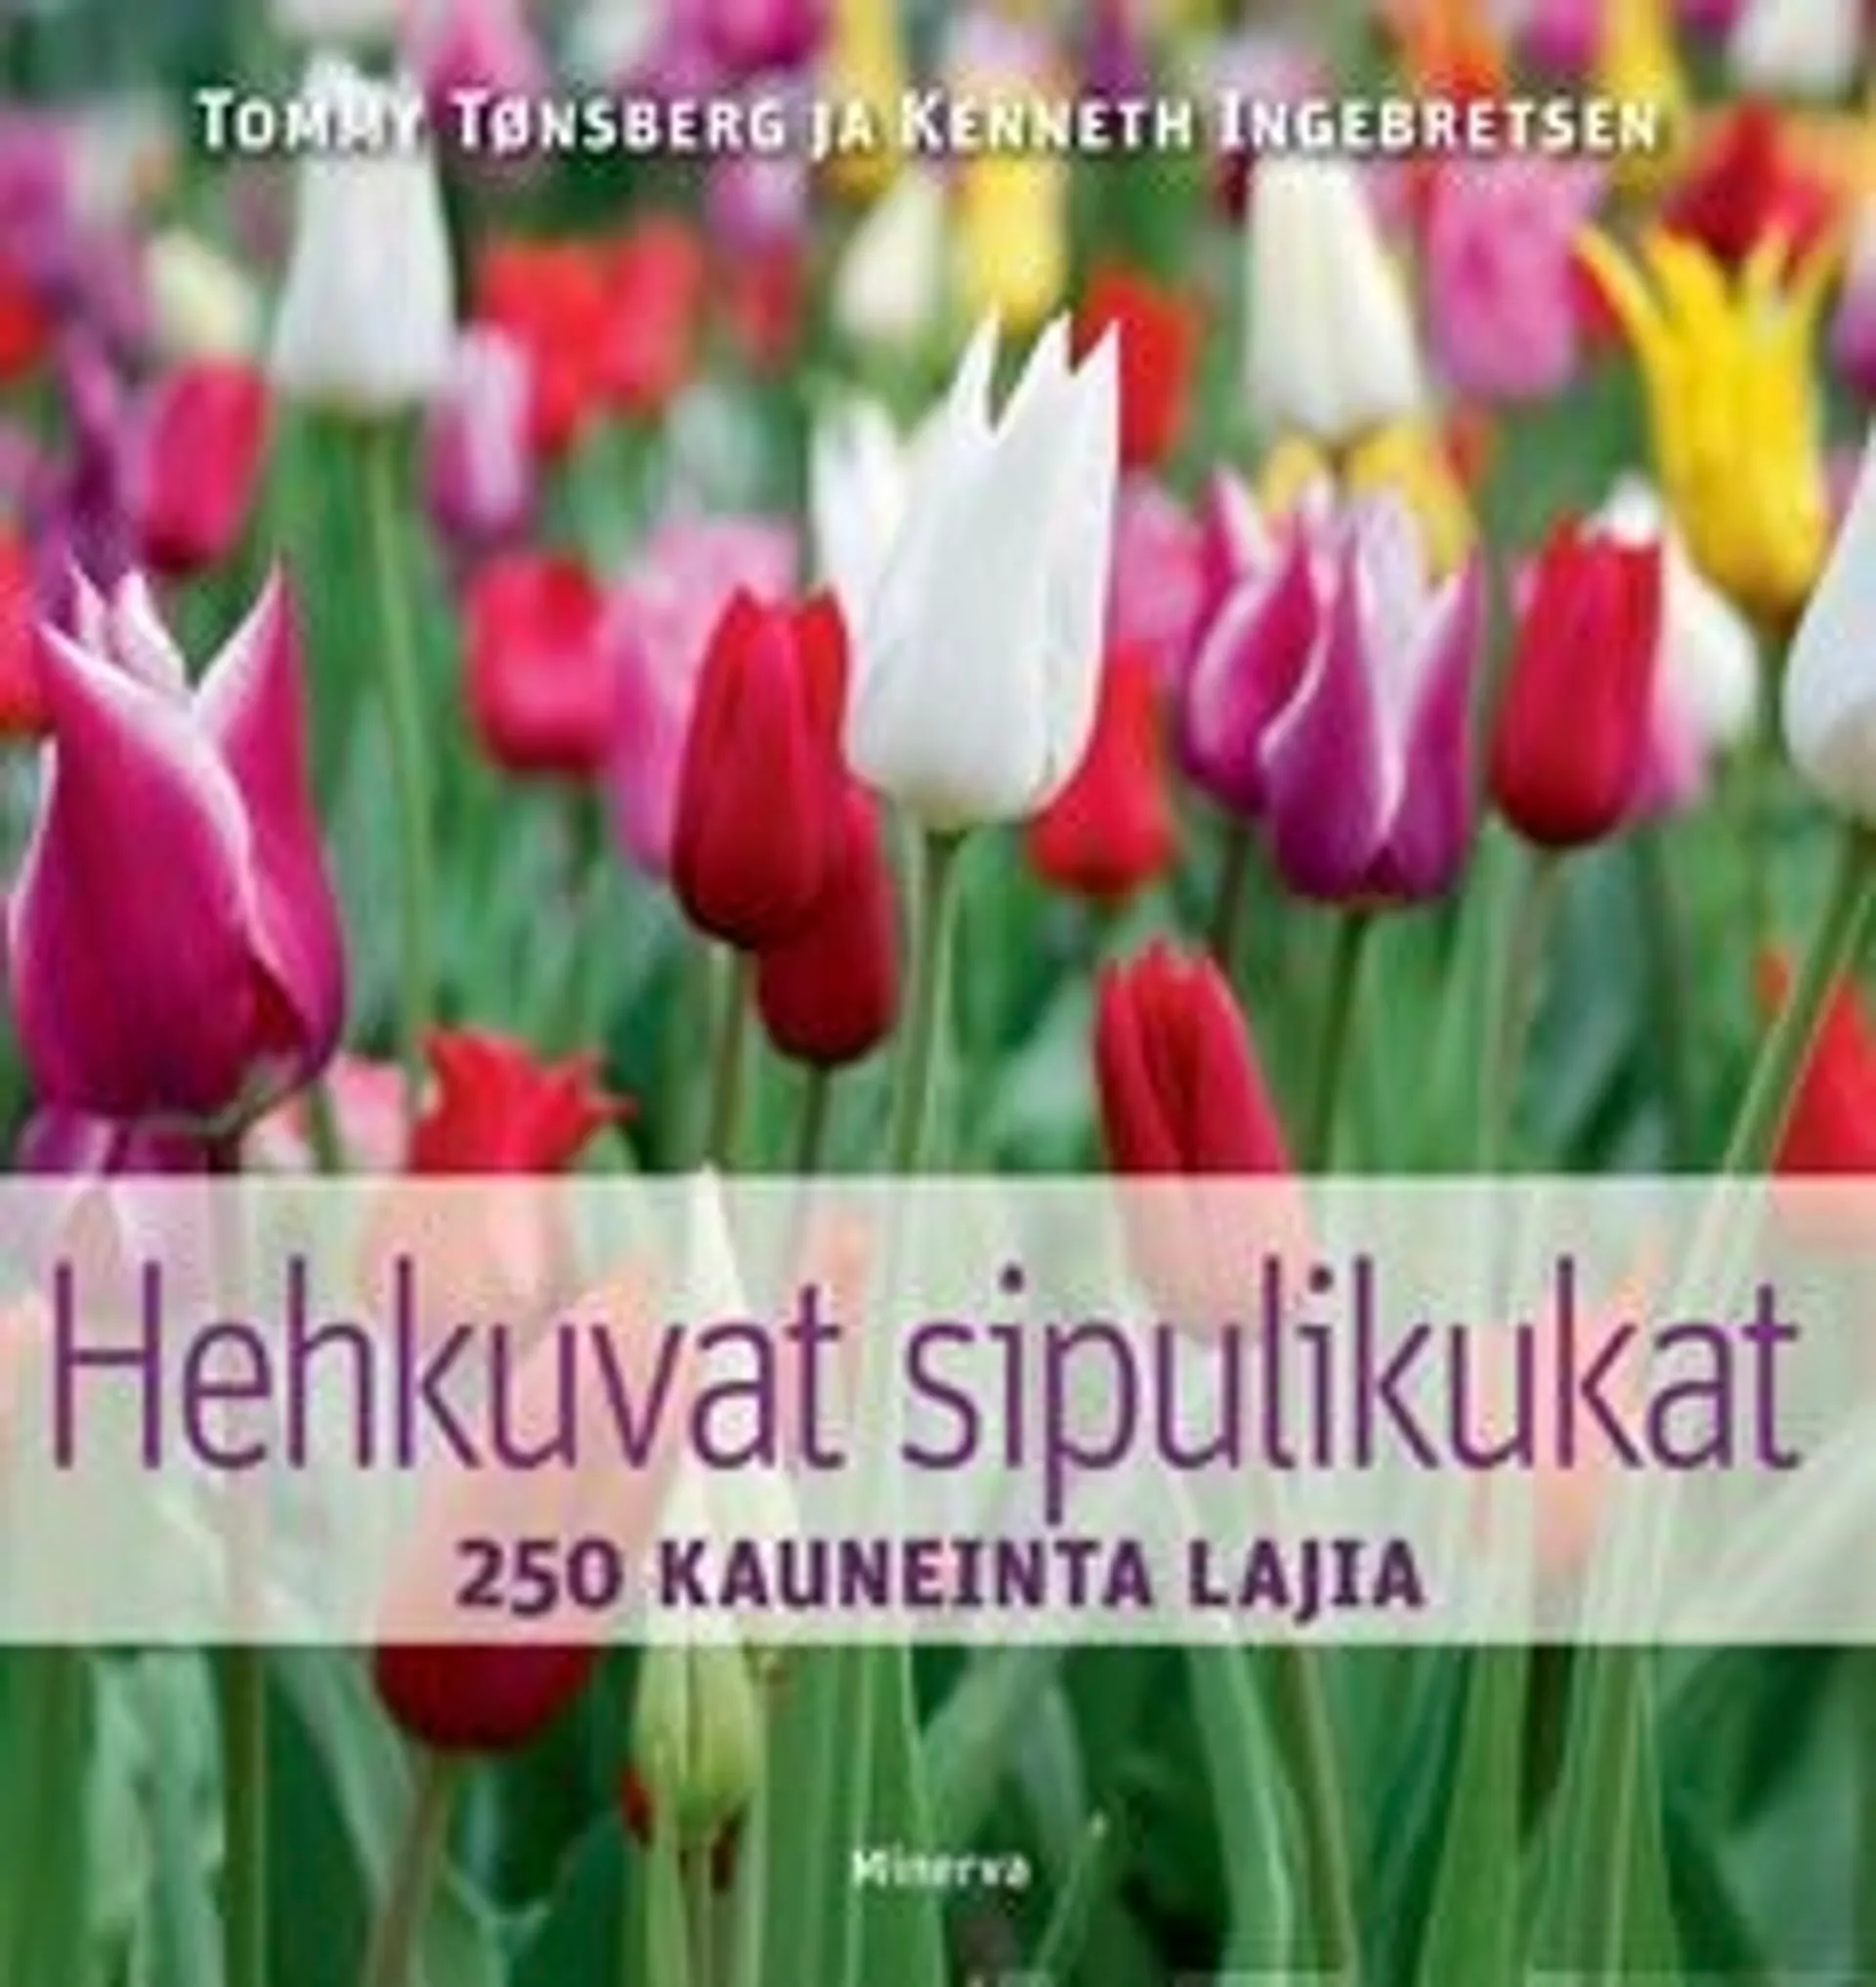 Tönsberg, Hehkuvat sipulikukat - 250 kauneinta lajia